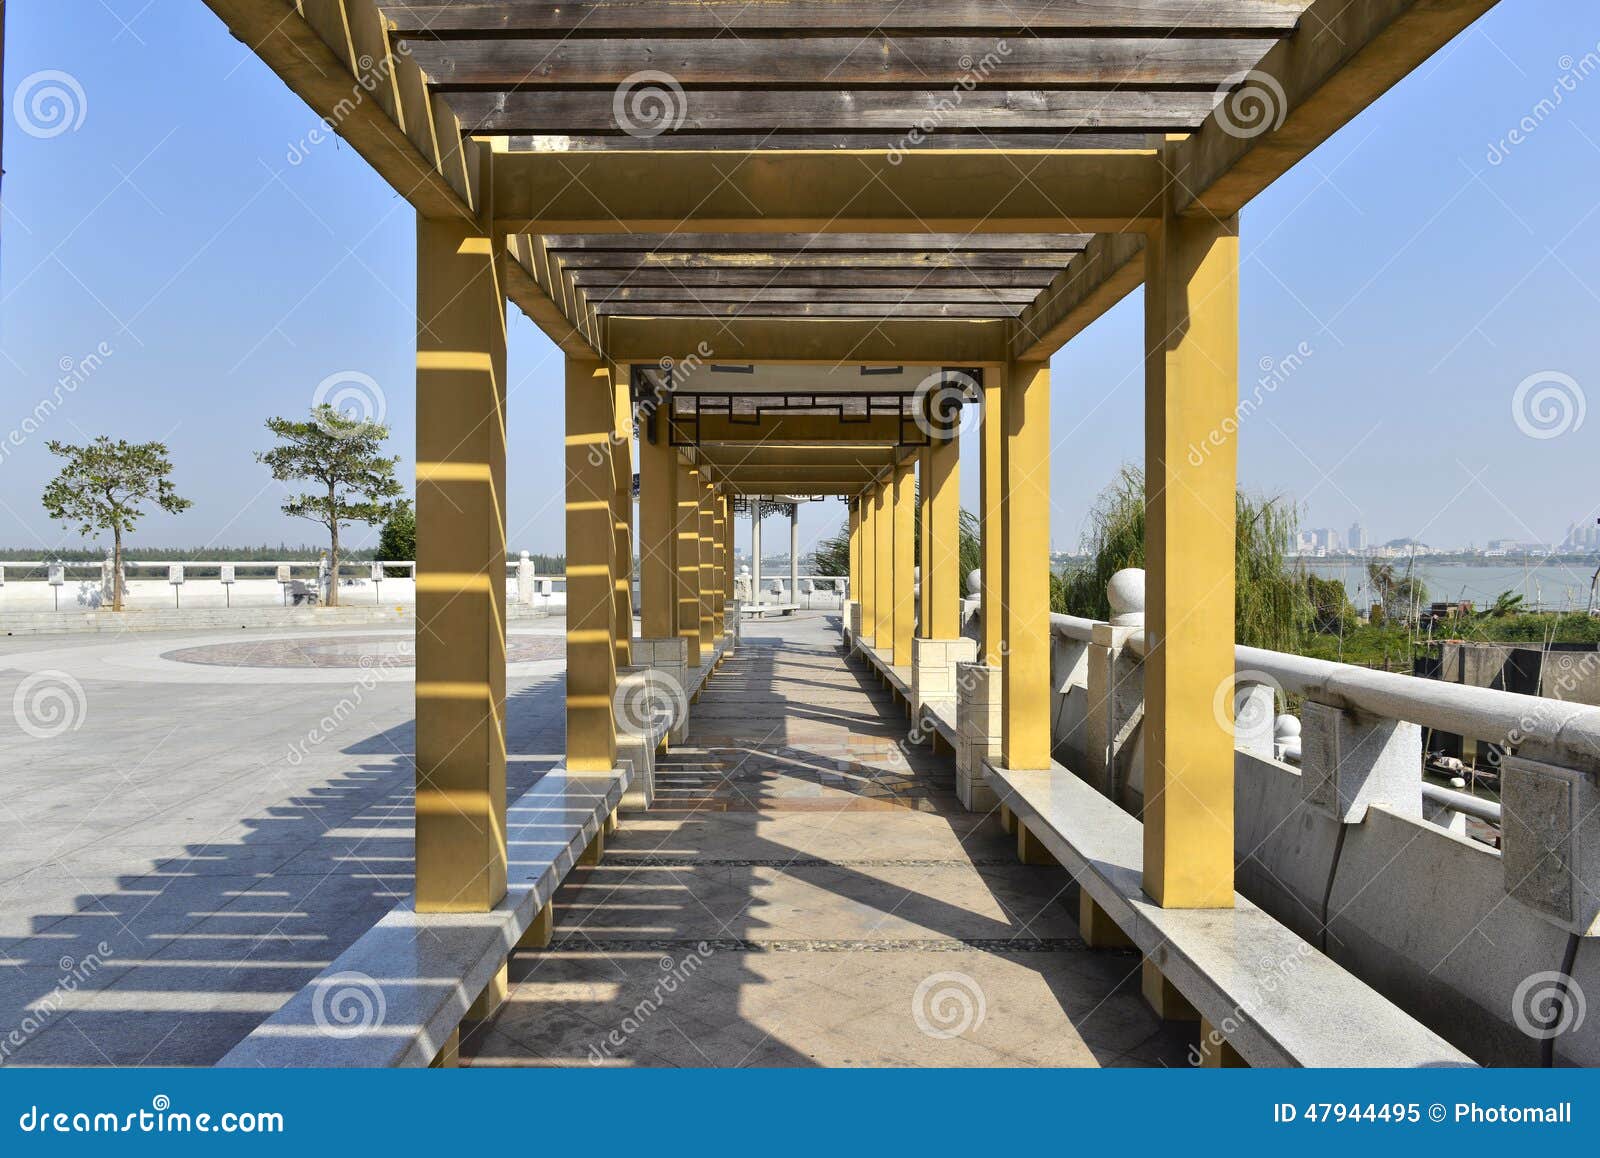 yellow wood roofed corridor